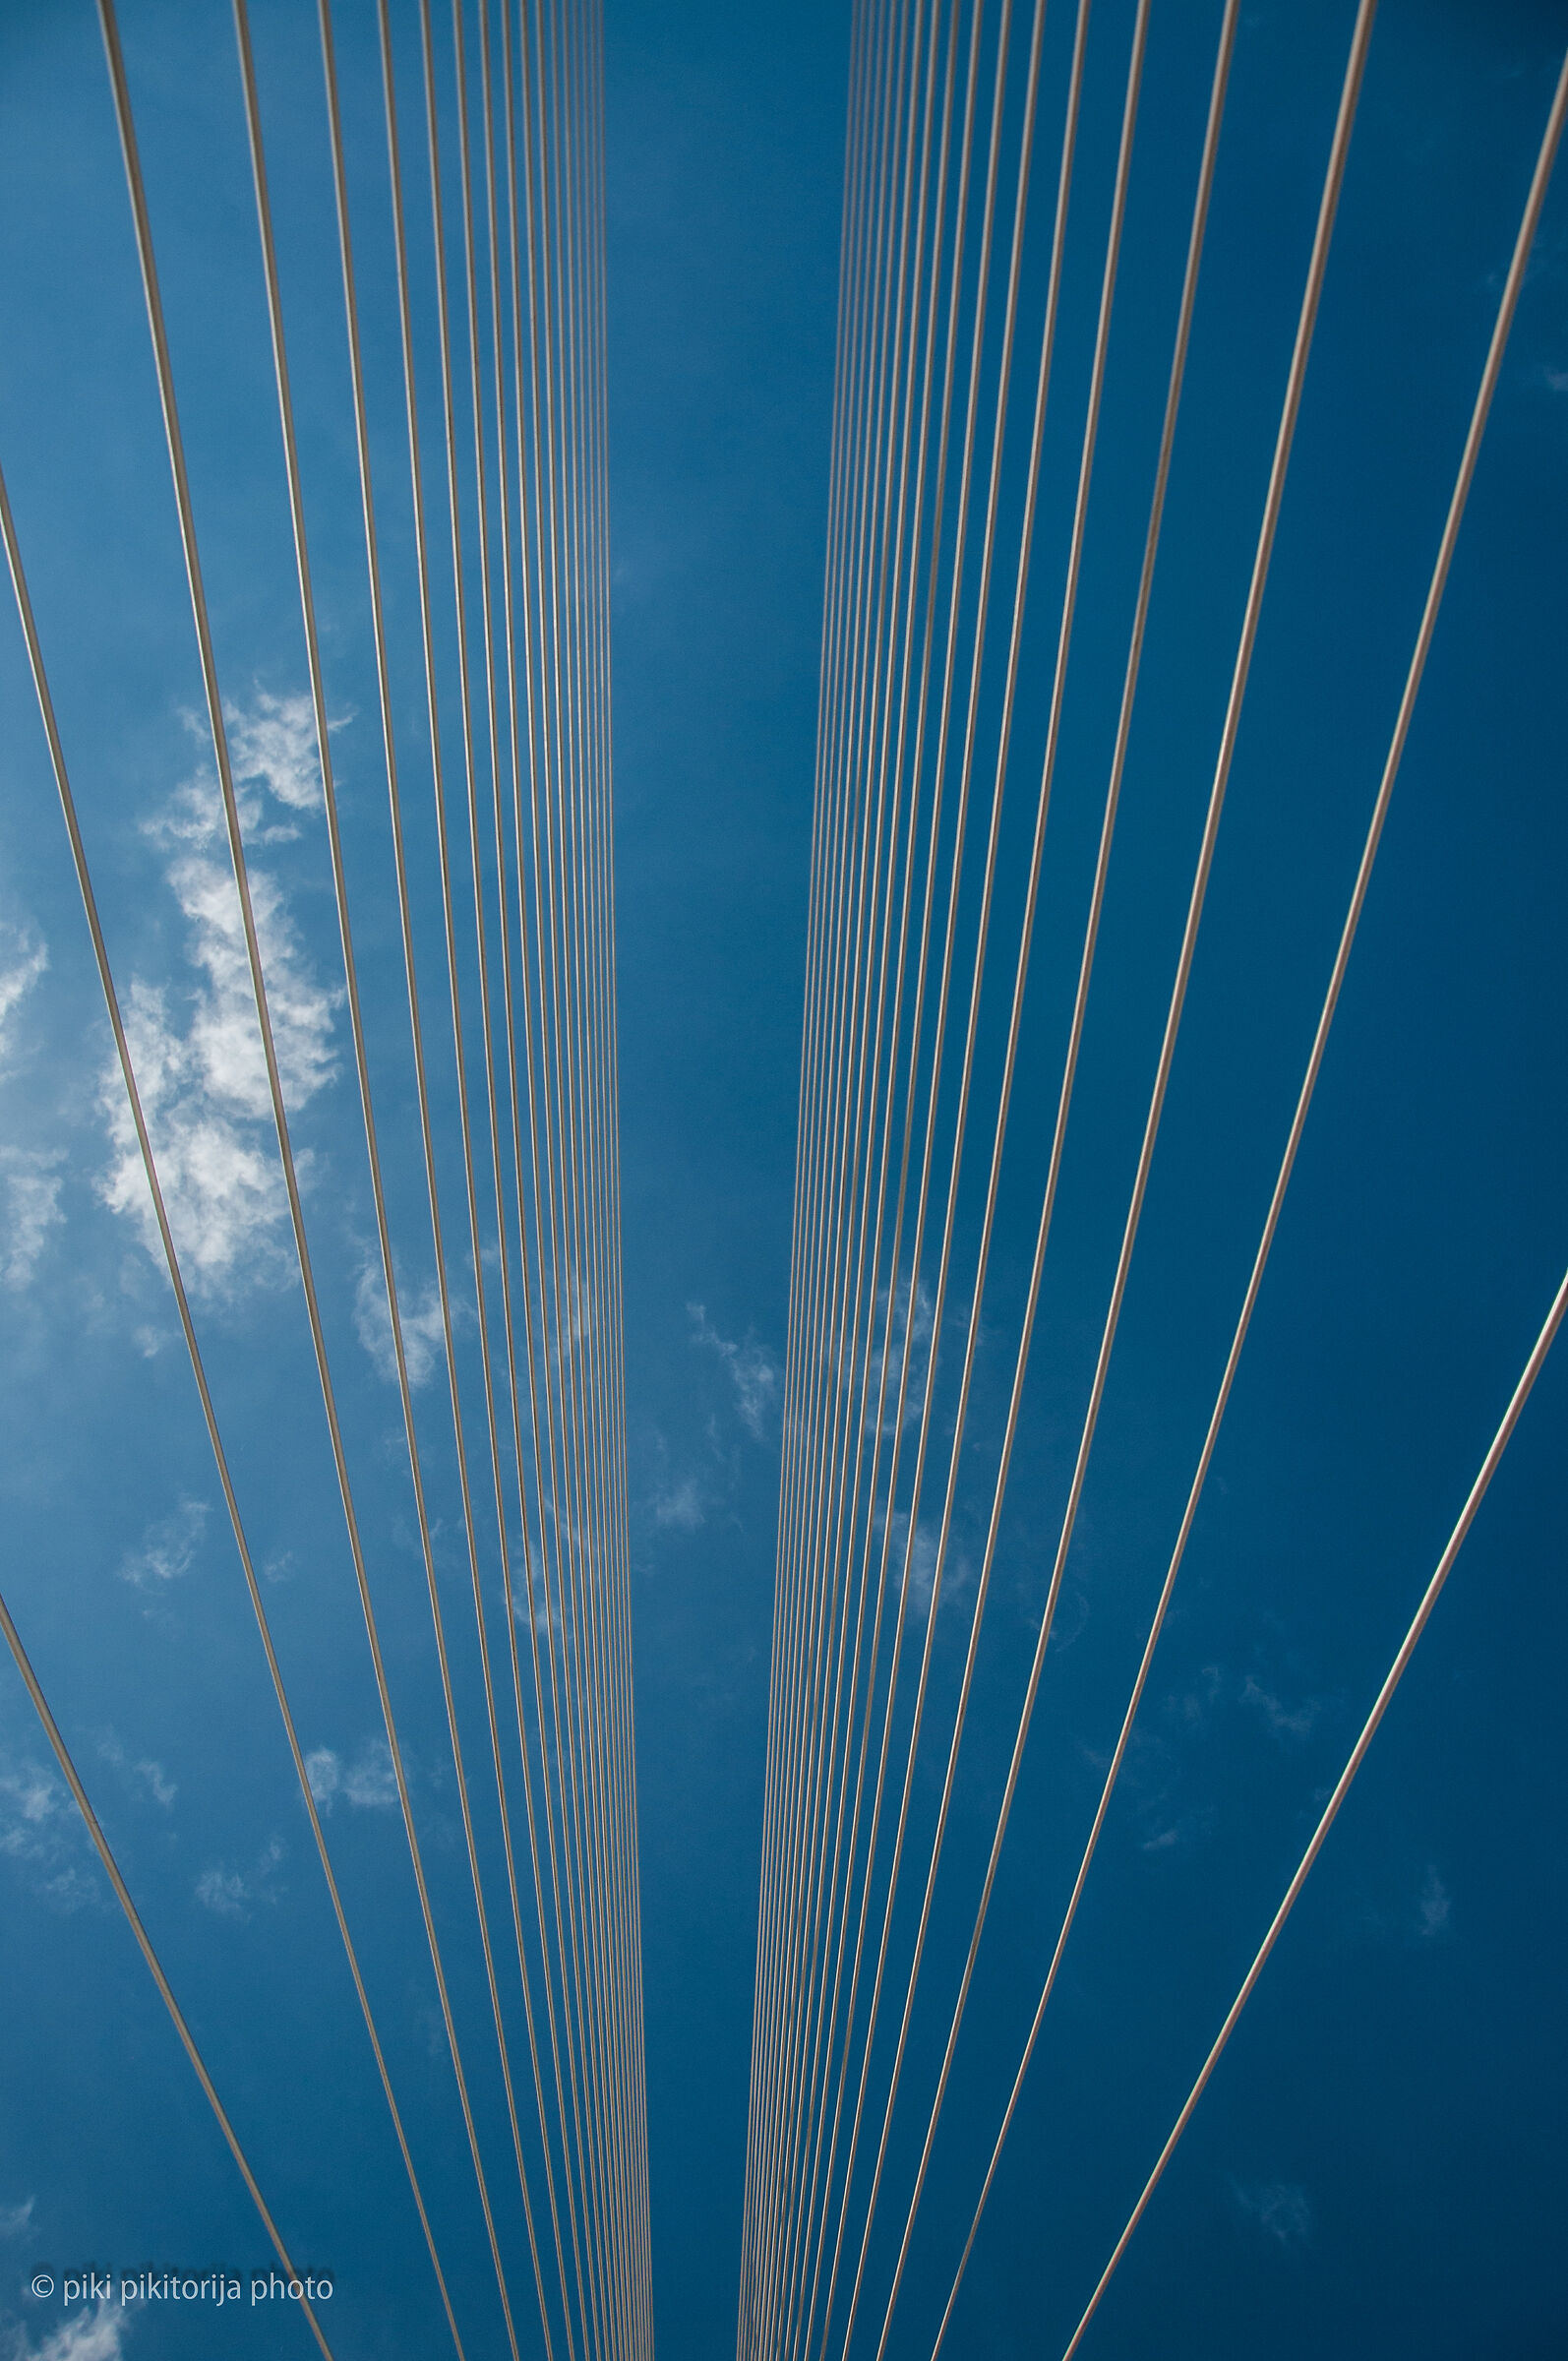 The Calatrava Bridge. My view...